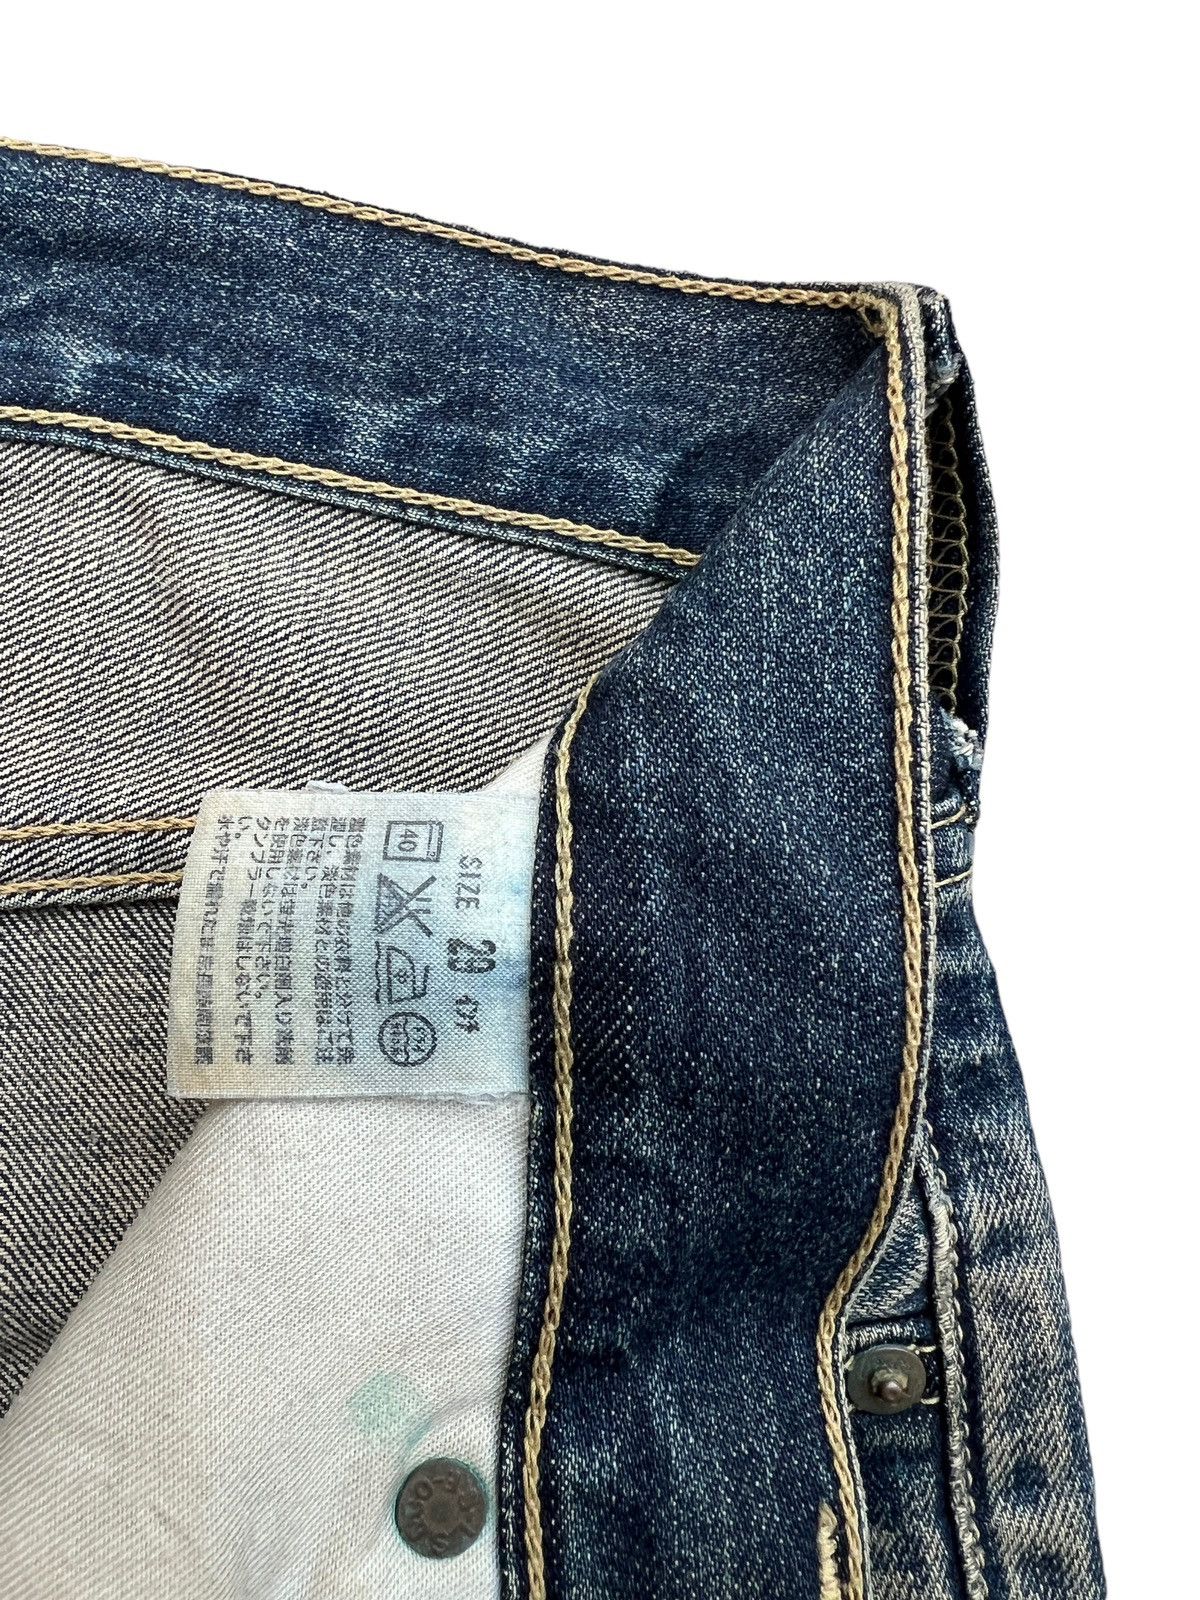 Vintage Levi’s 503 Distressed Rusty Denim Jeans 30x32 - 15